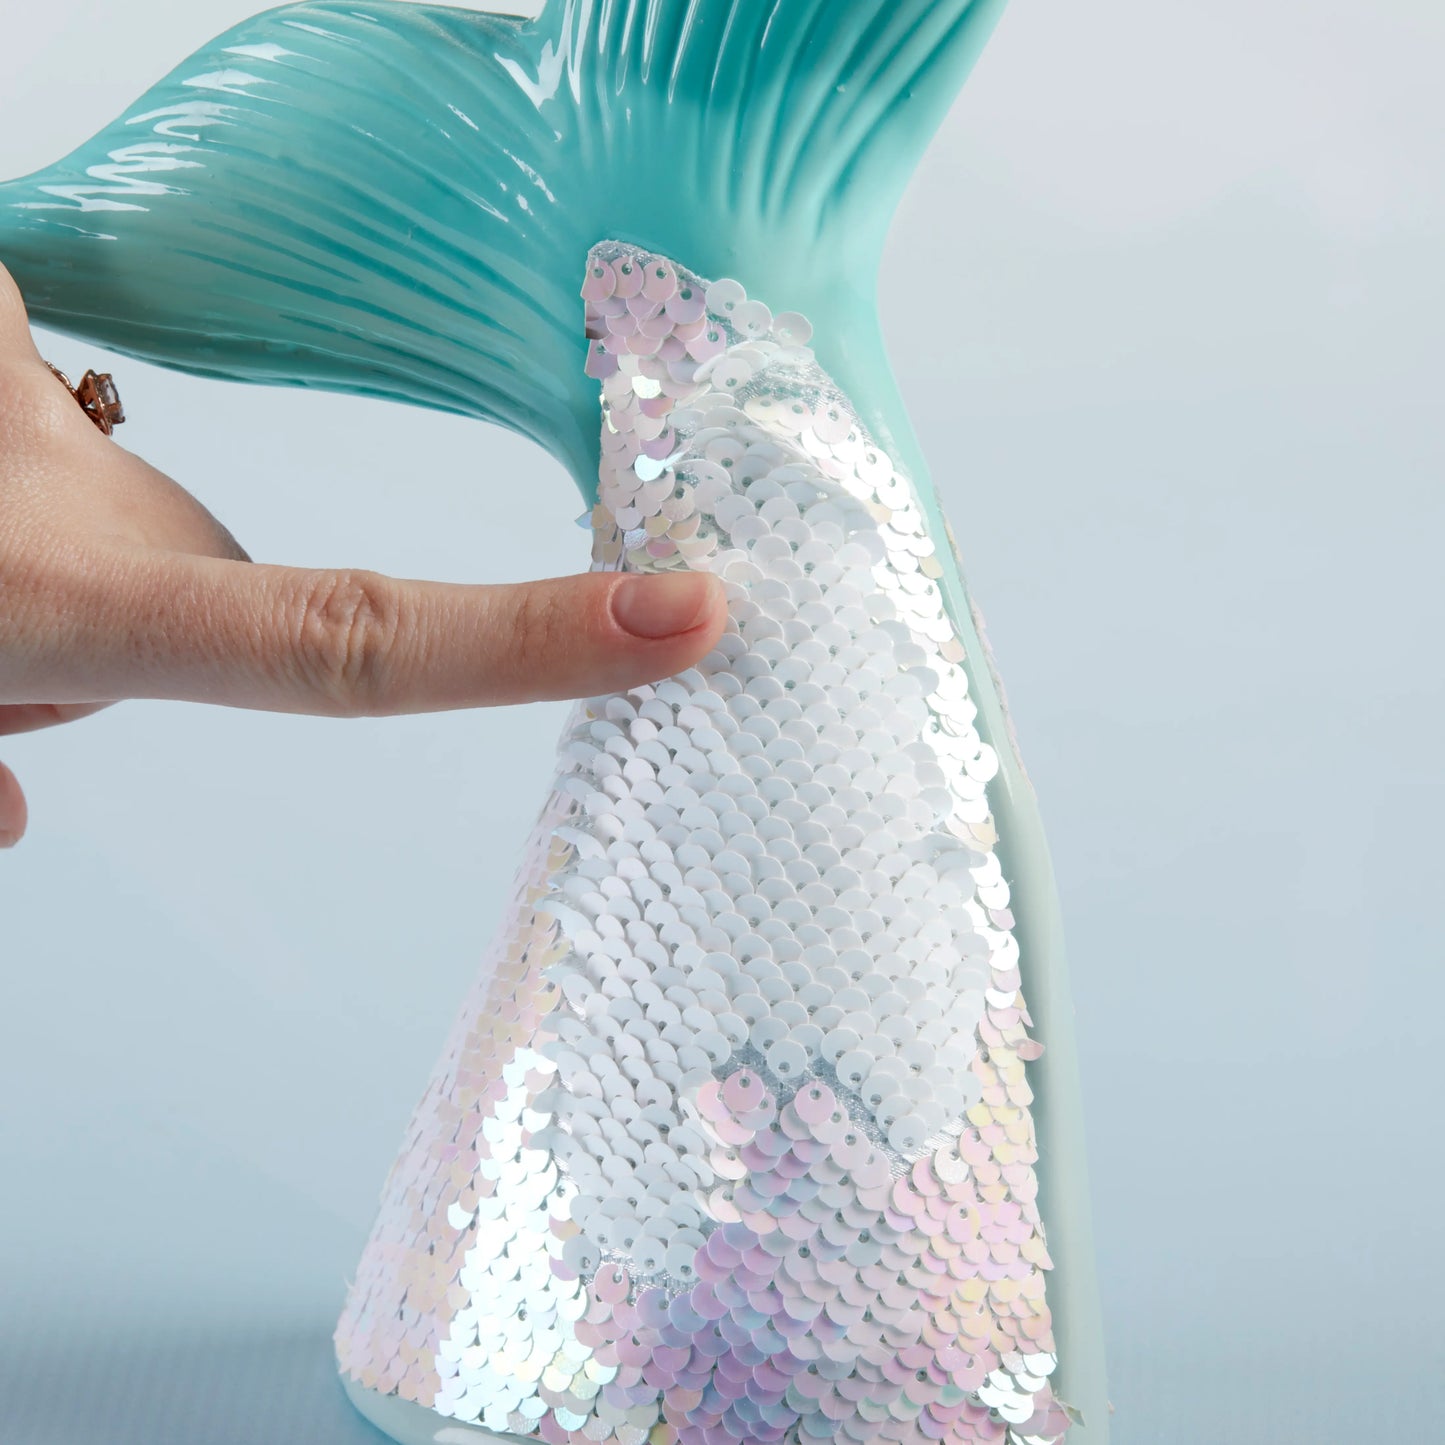 Reversible Sequin Mermaid Tail Porcelain Bank - Spellbound